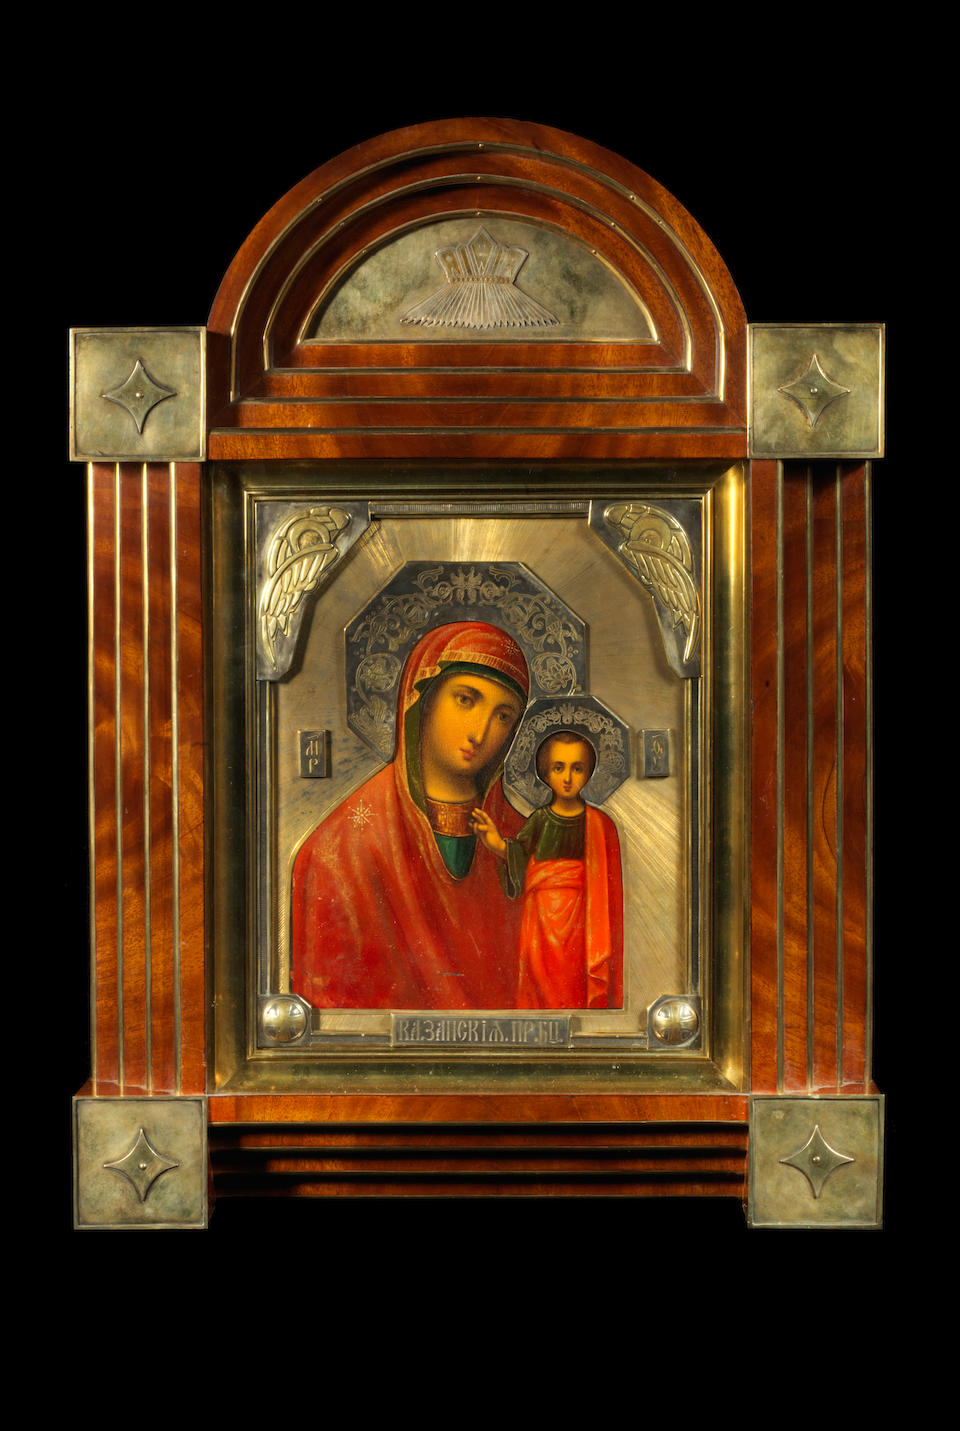 Christ Pantocrator with Mother of God Kazanskayamaker's mark of Vladimirov, St. Petersburg, 1908-1917